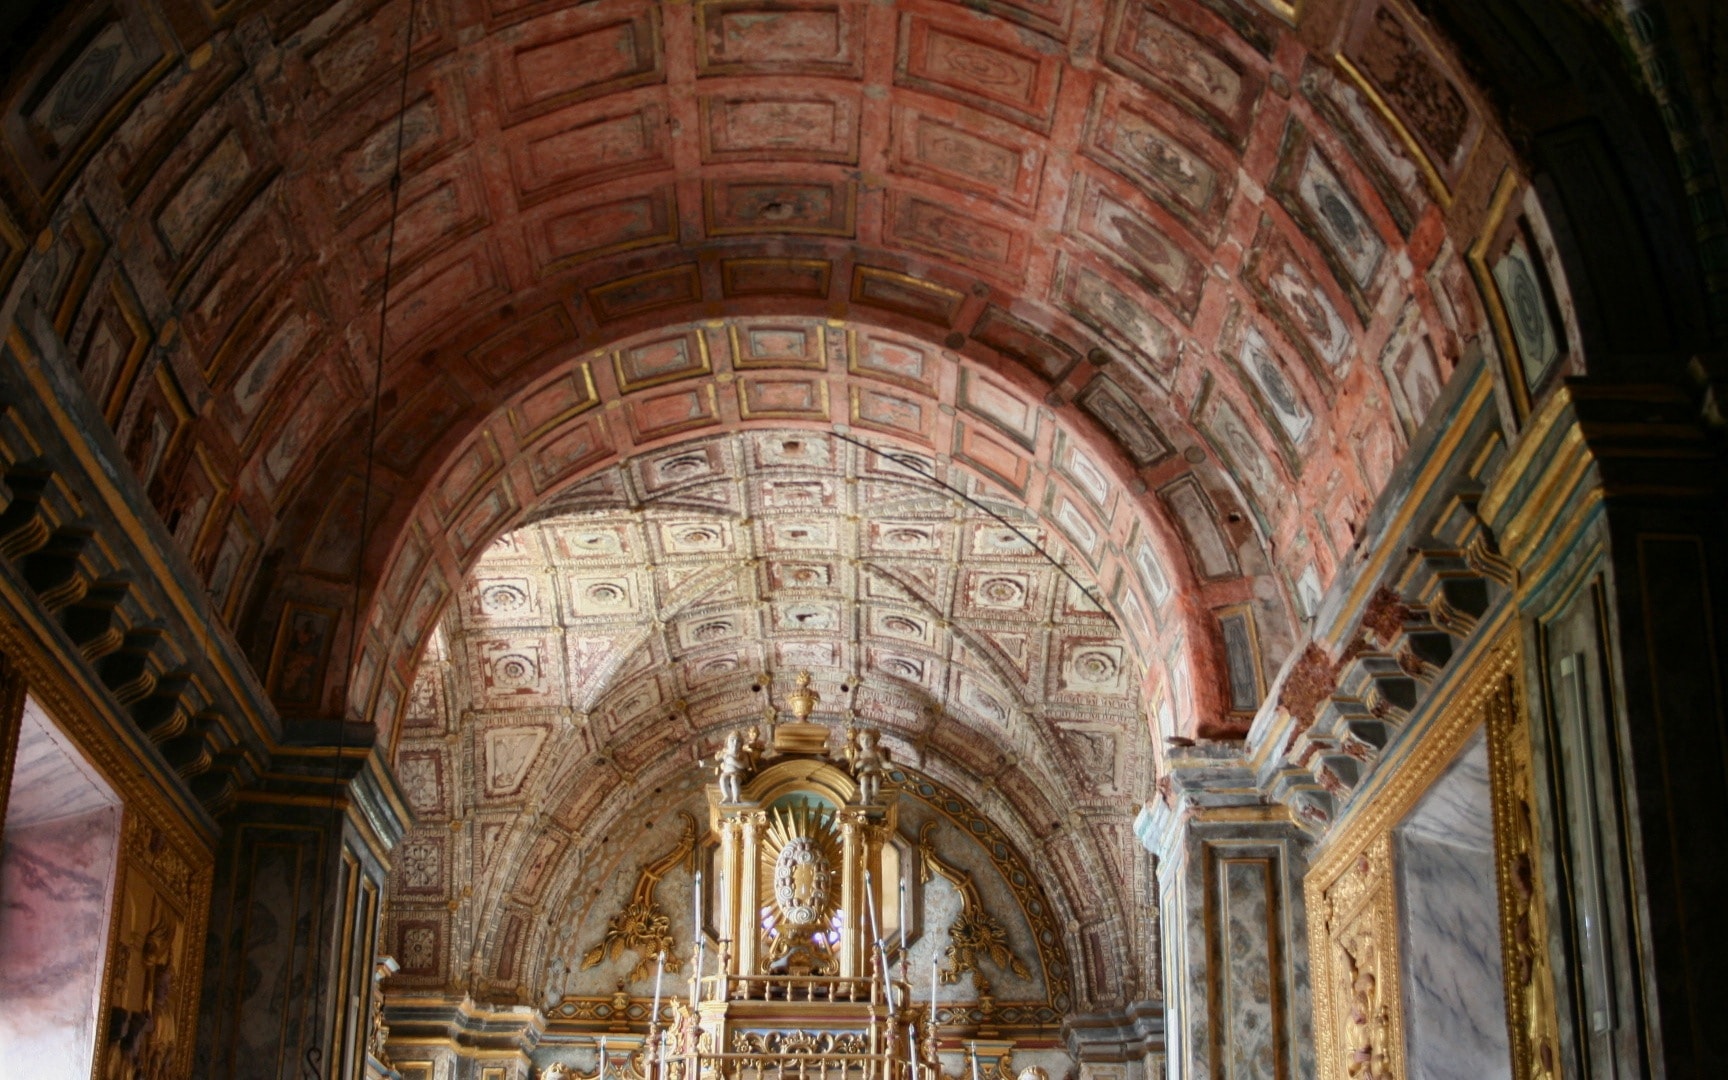 Baroque arch inside Sé cathedral